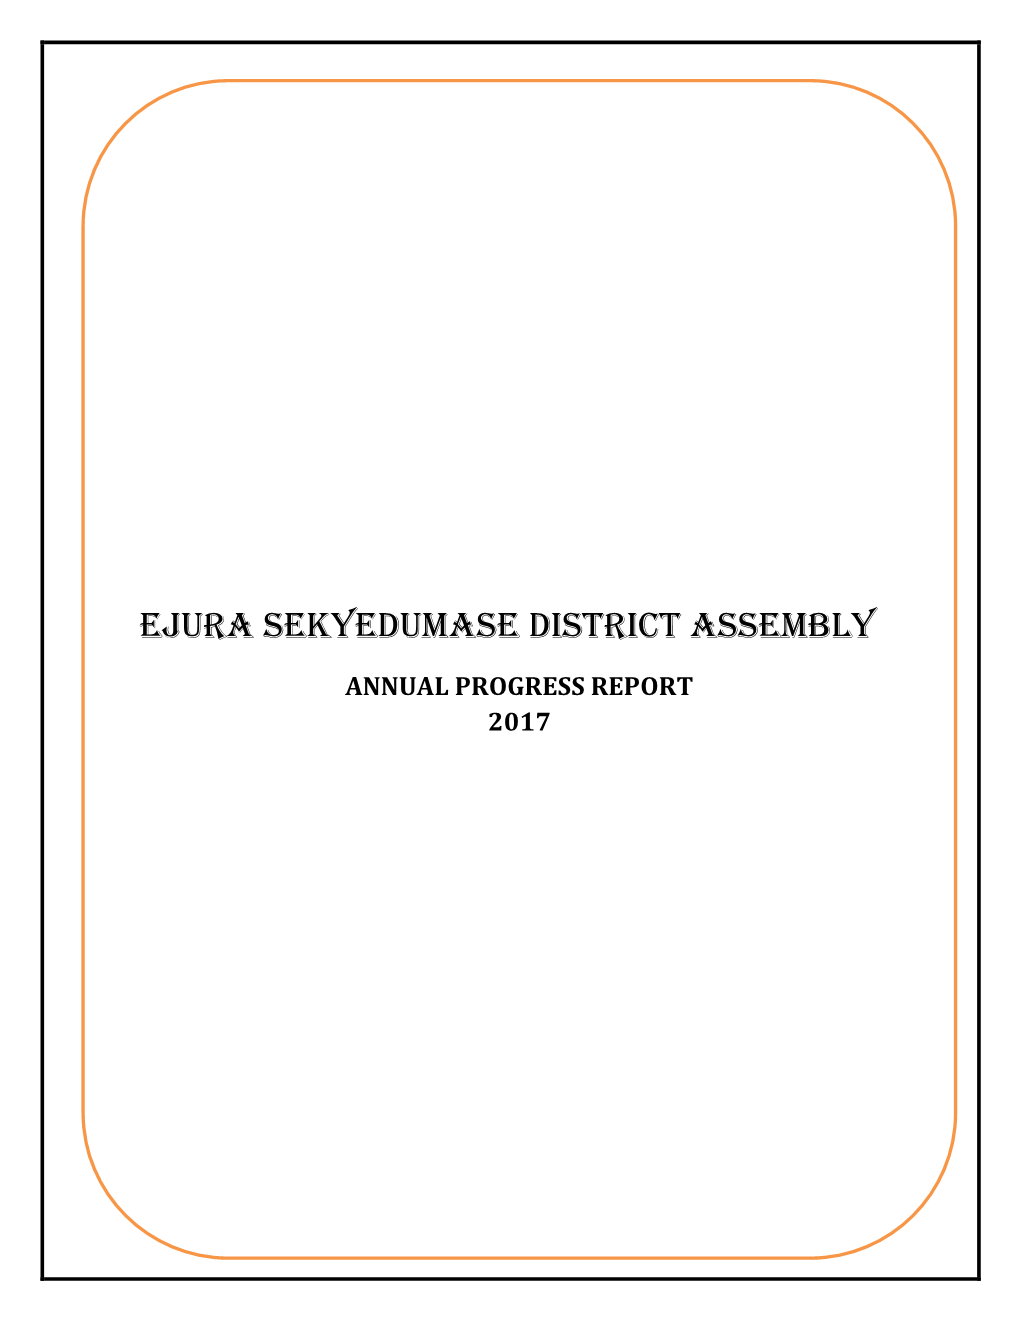 Ejura Sekyedumase District Assembly